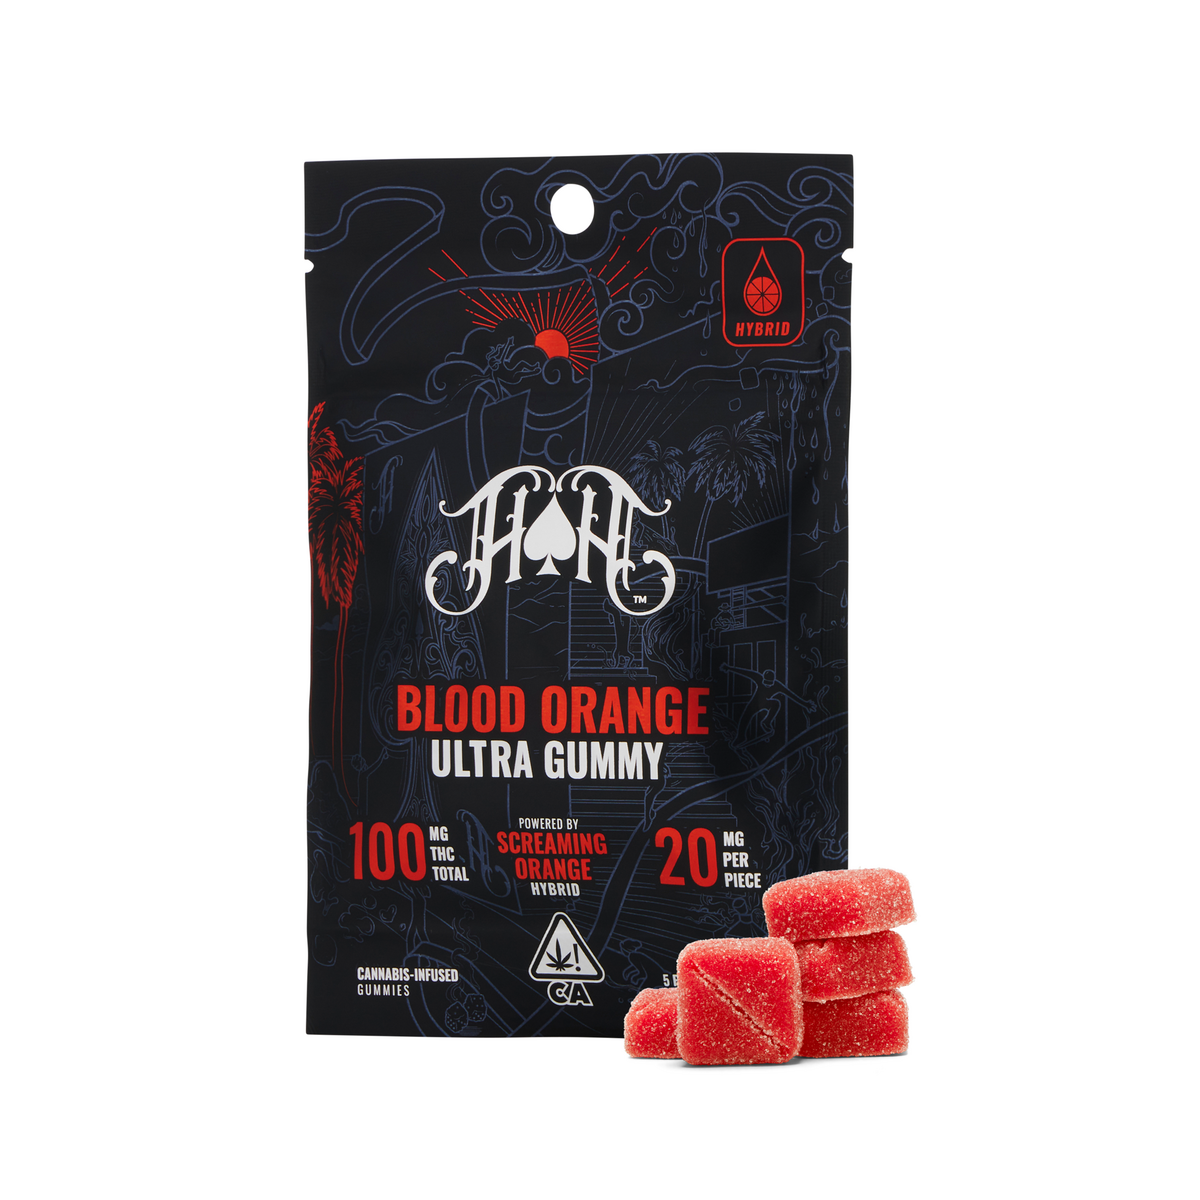 Blood Orange | Hybrid - Ultra Pure Gummies - 100mg THC